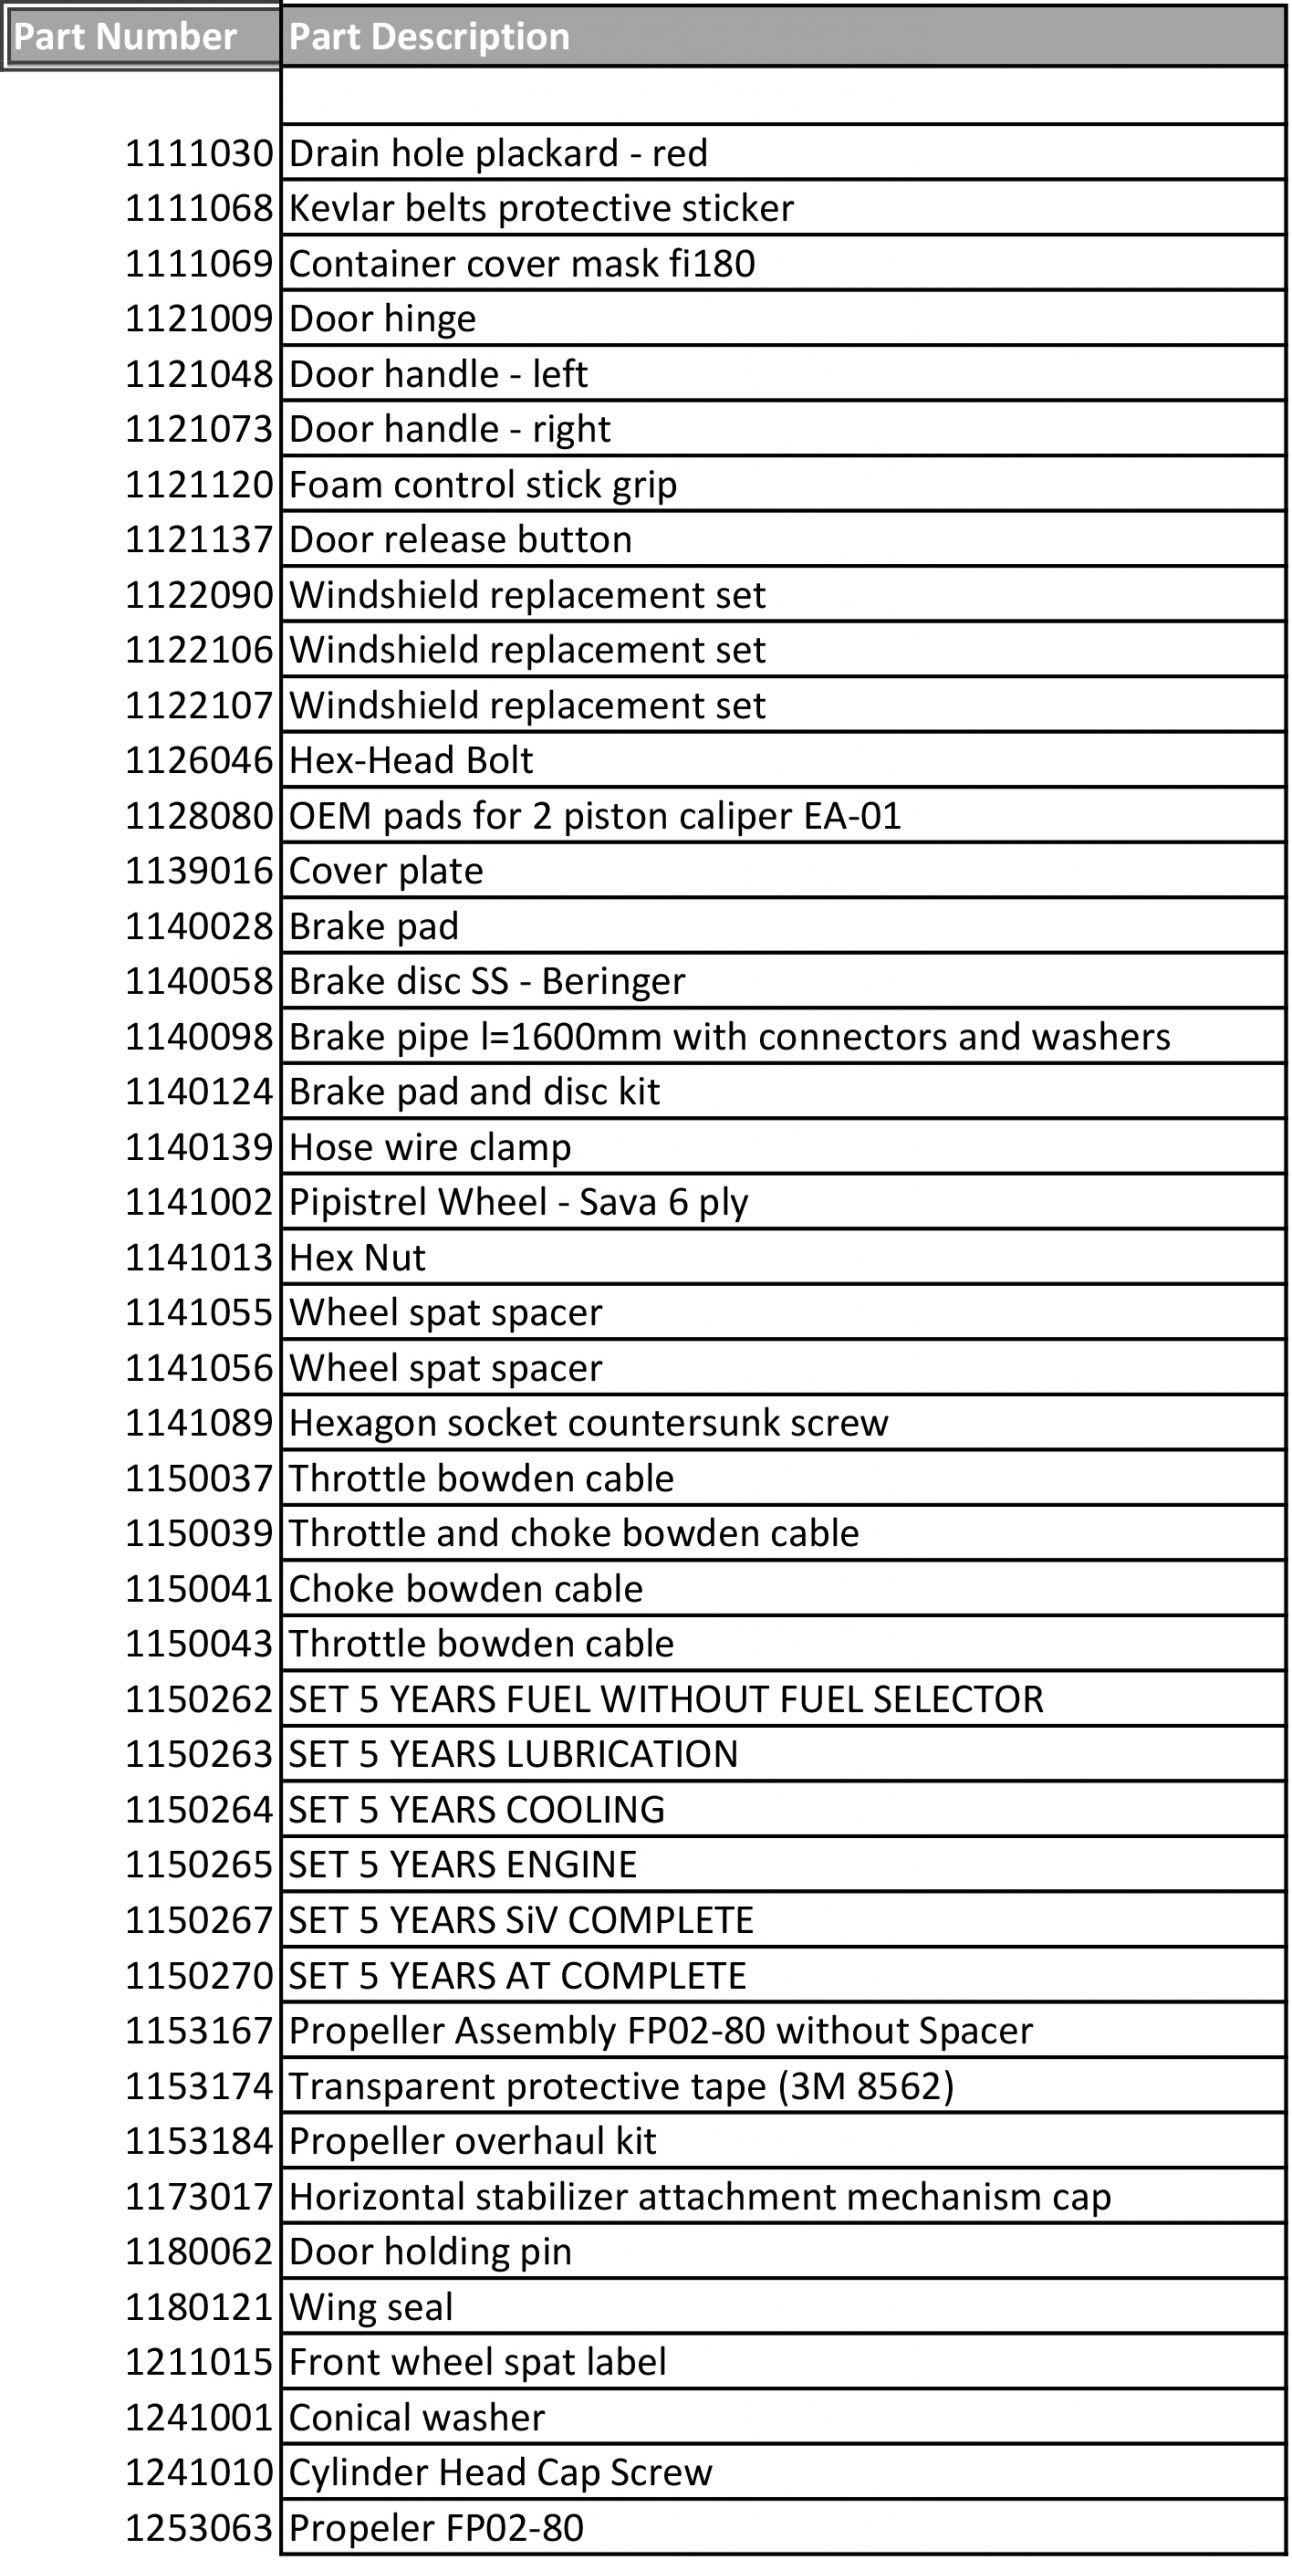 Pipistrel Parts List